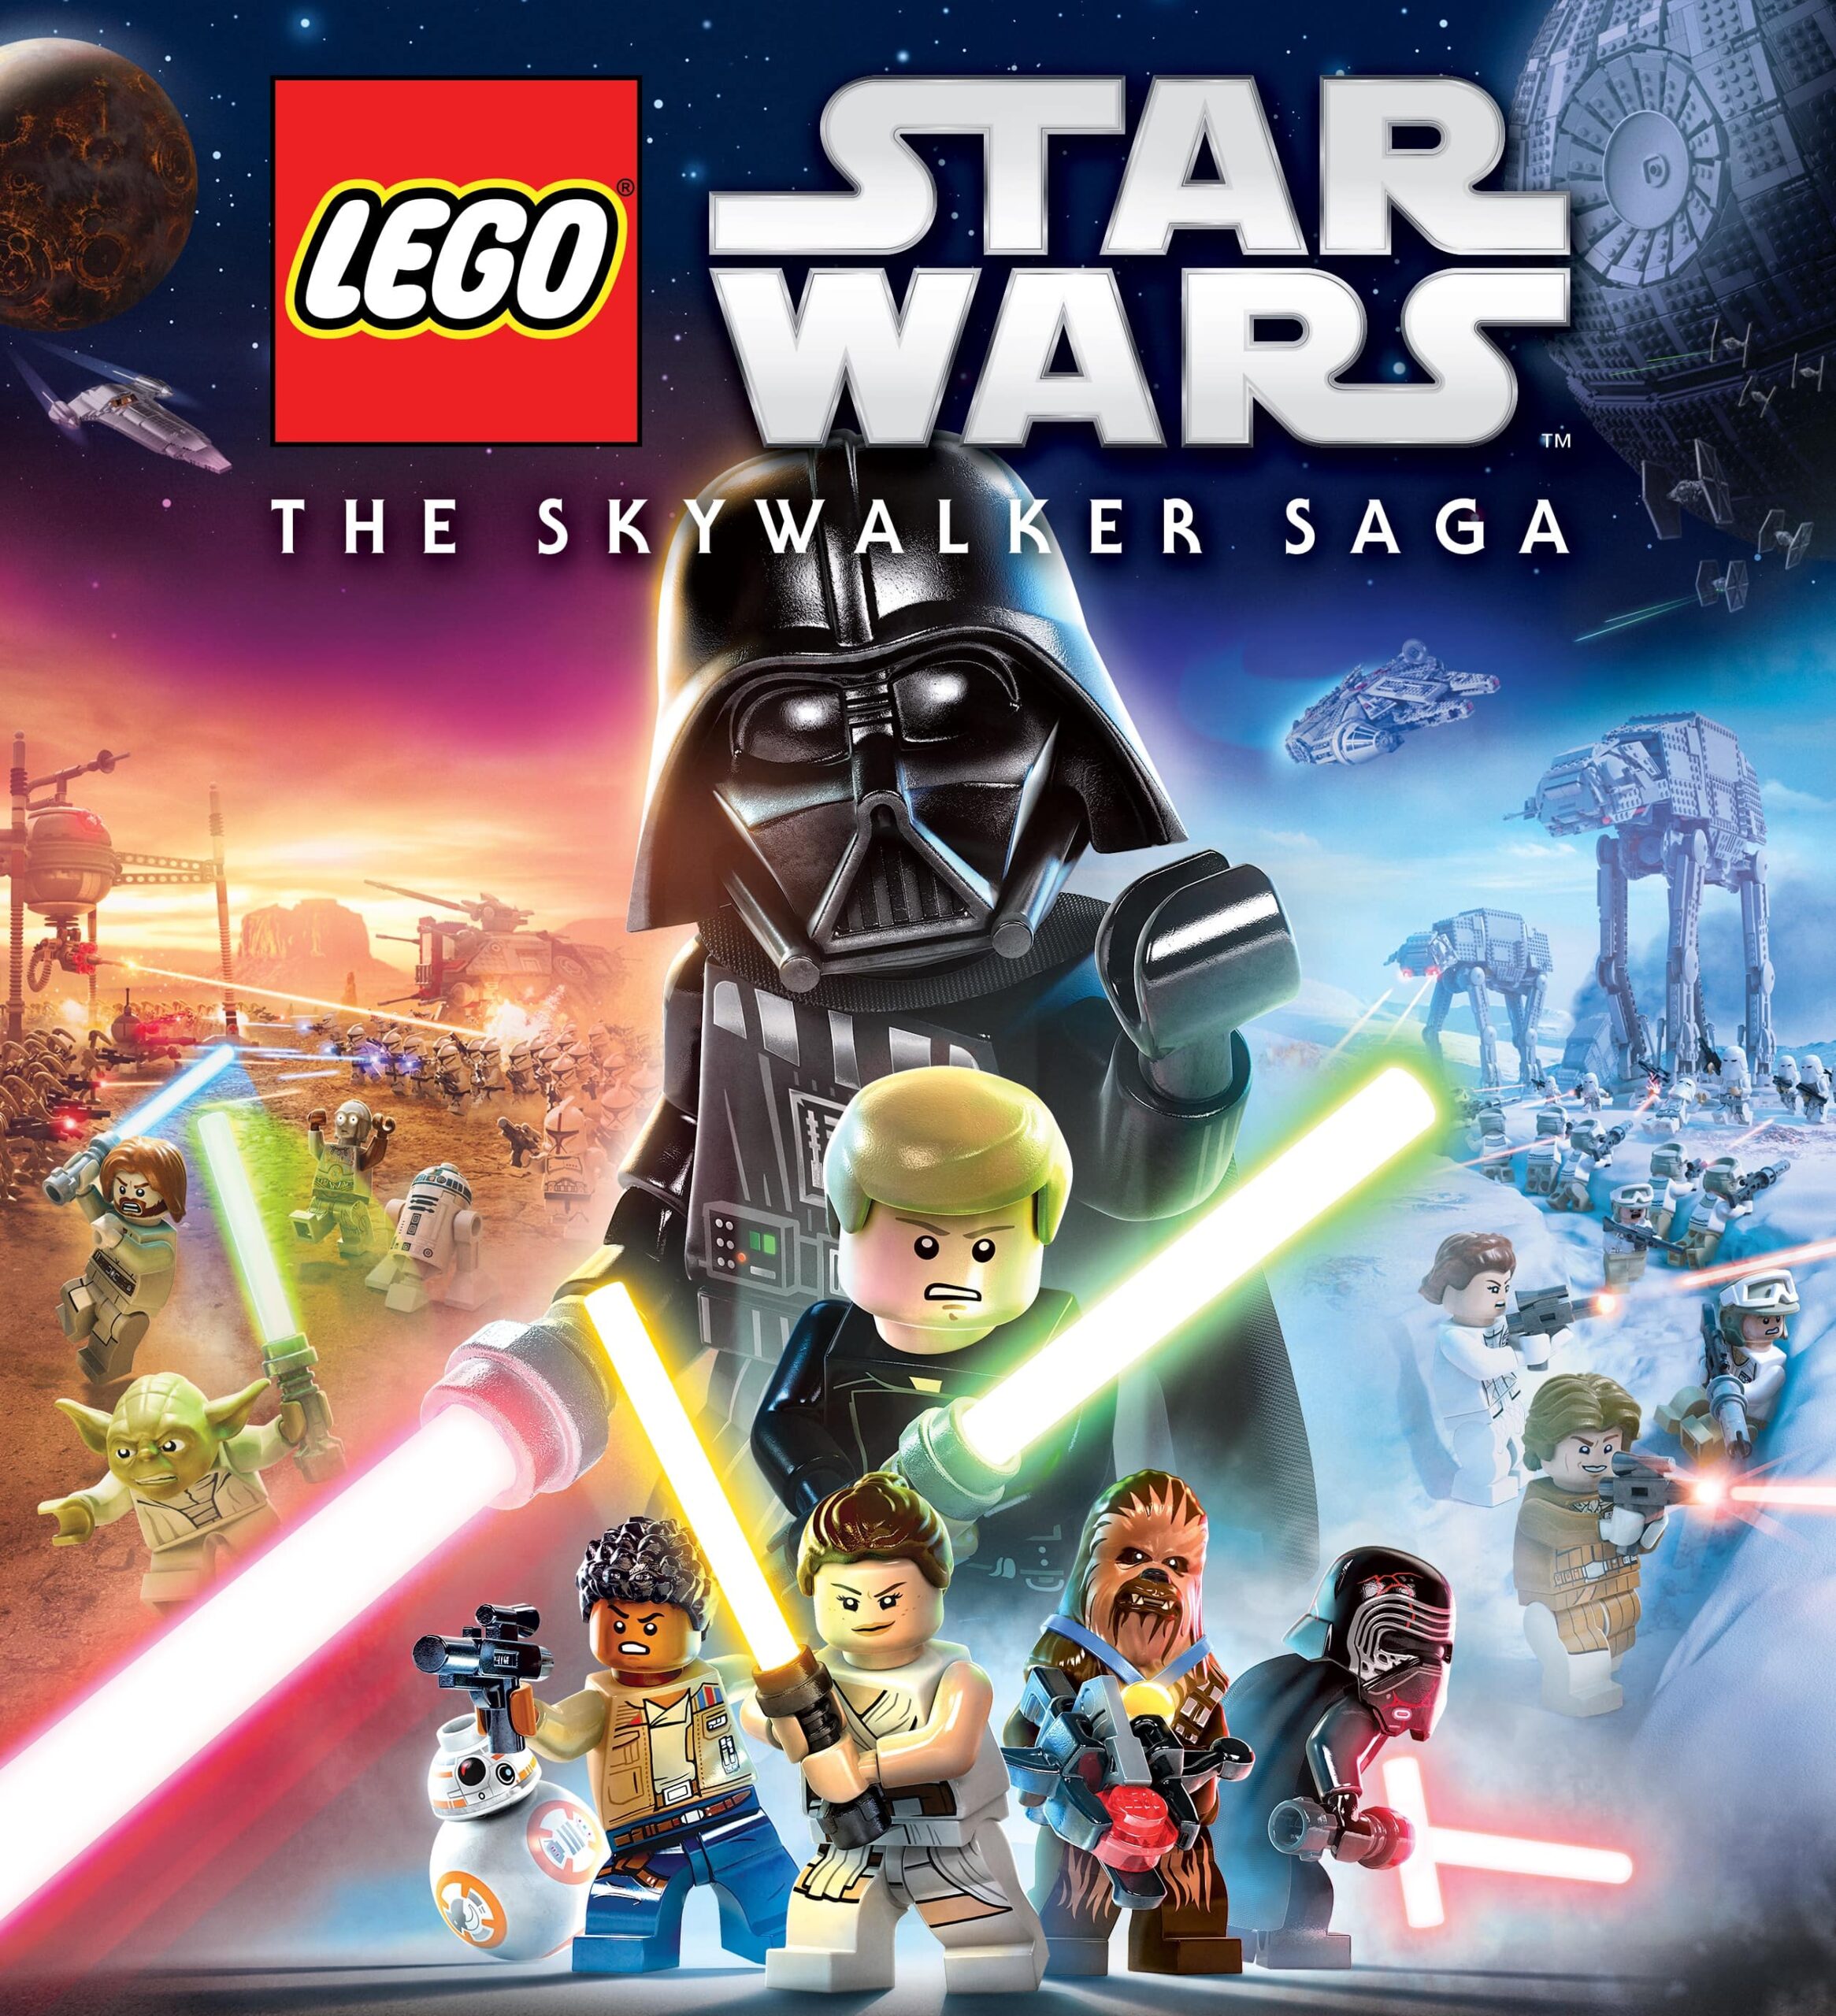 LEGO Star Wars: The Skywalker Saga Official Key Art